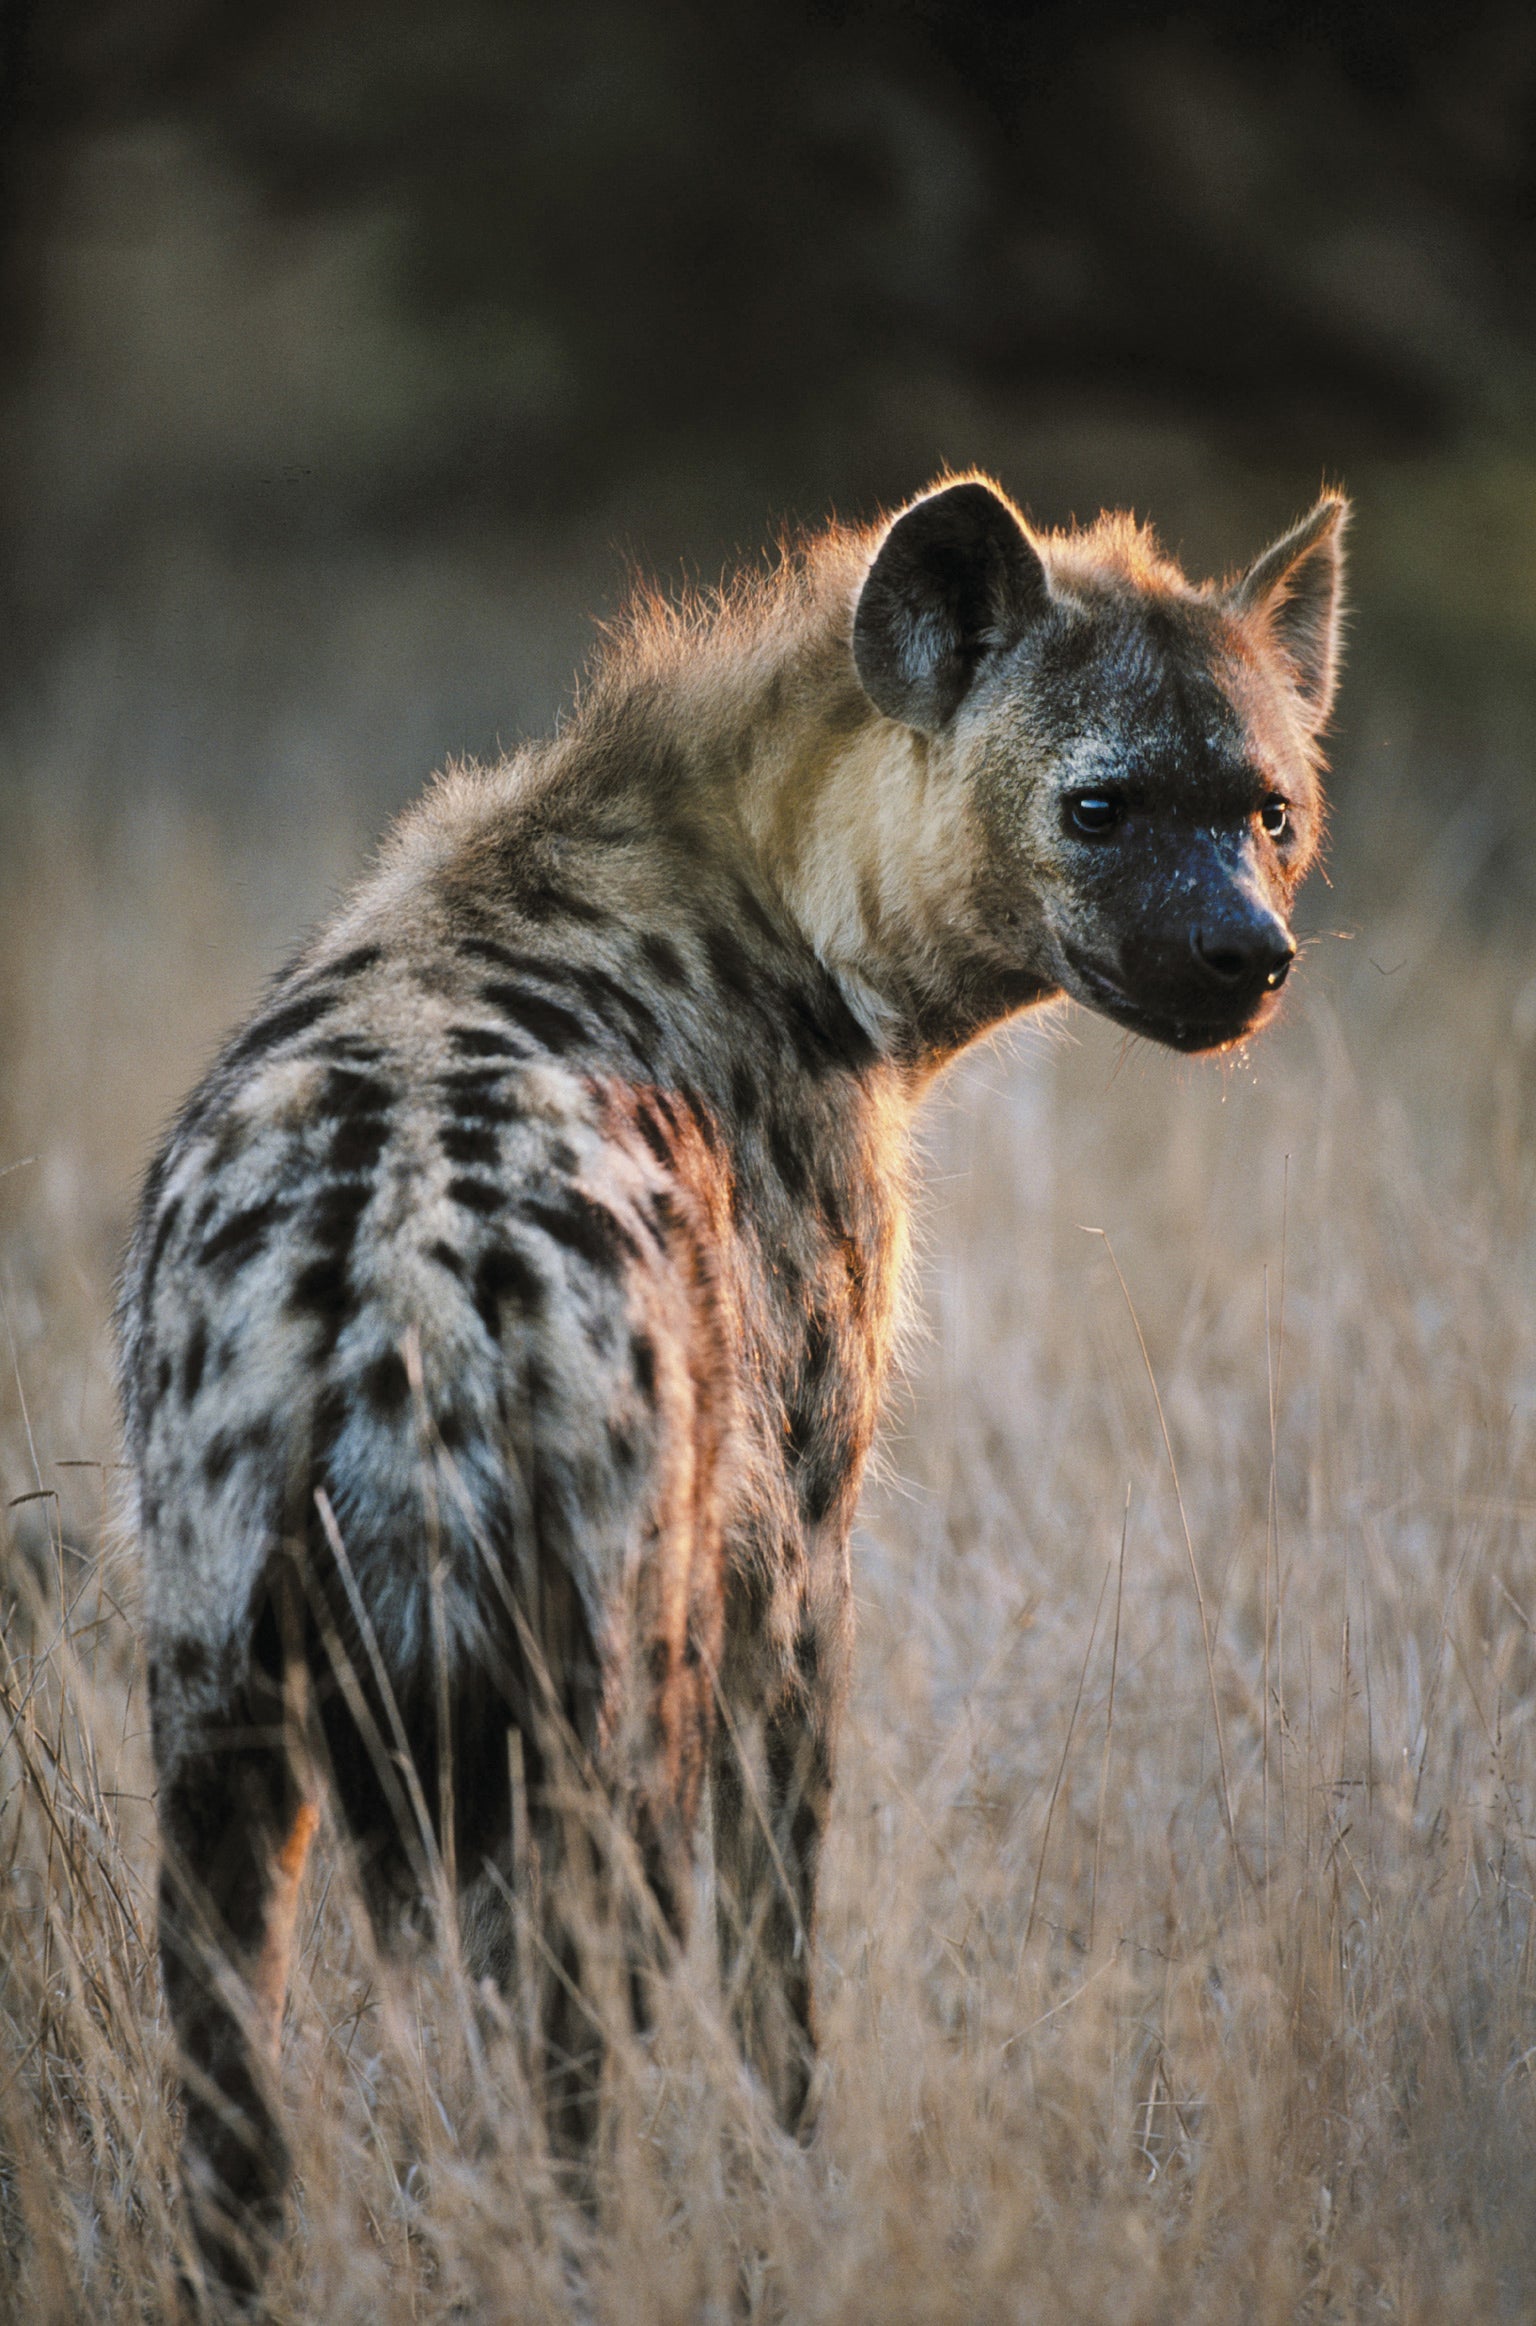 Hungry Hyenas Can Help Human Health - Scientific American